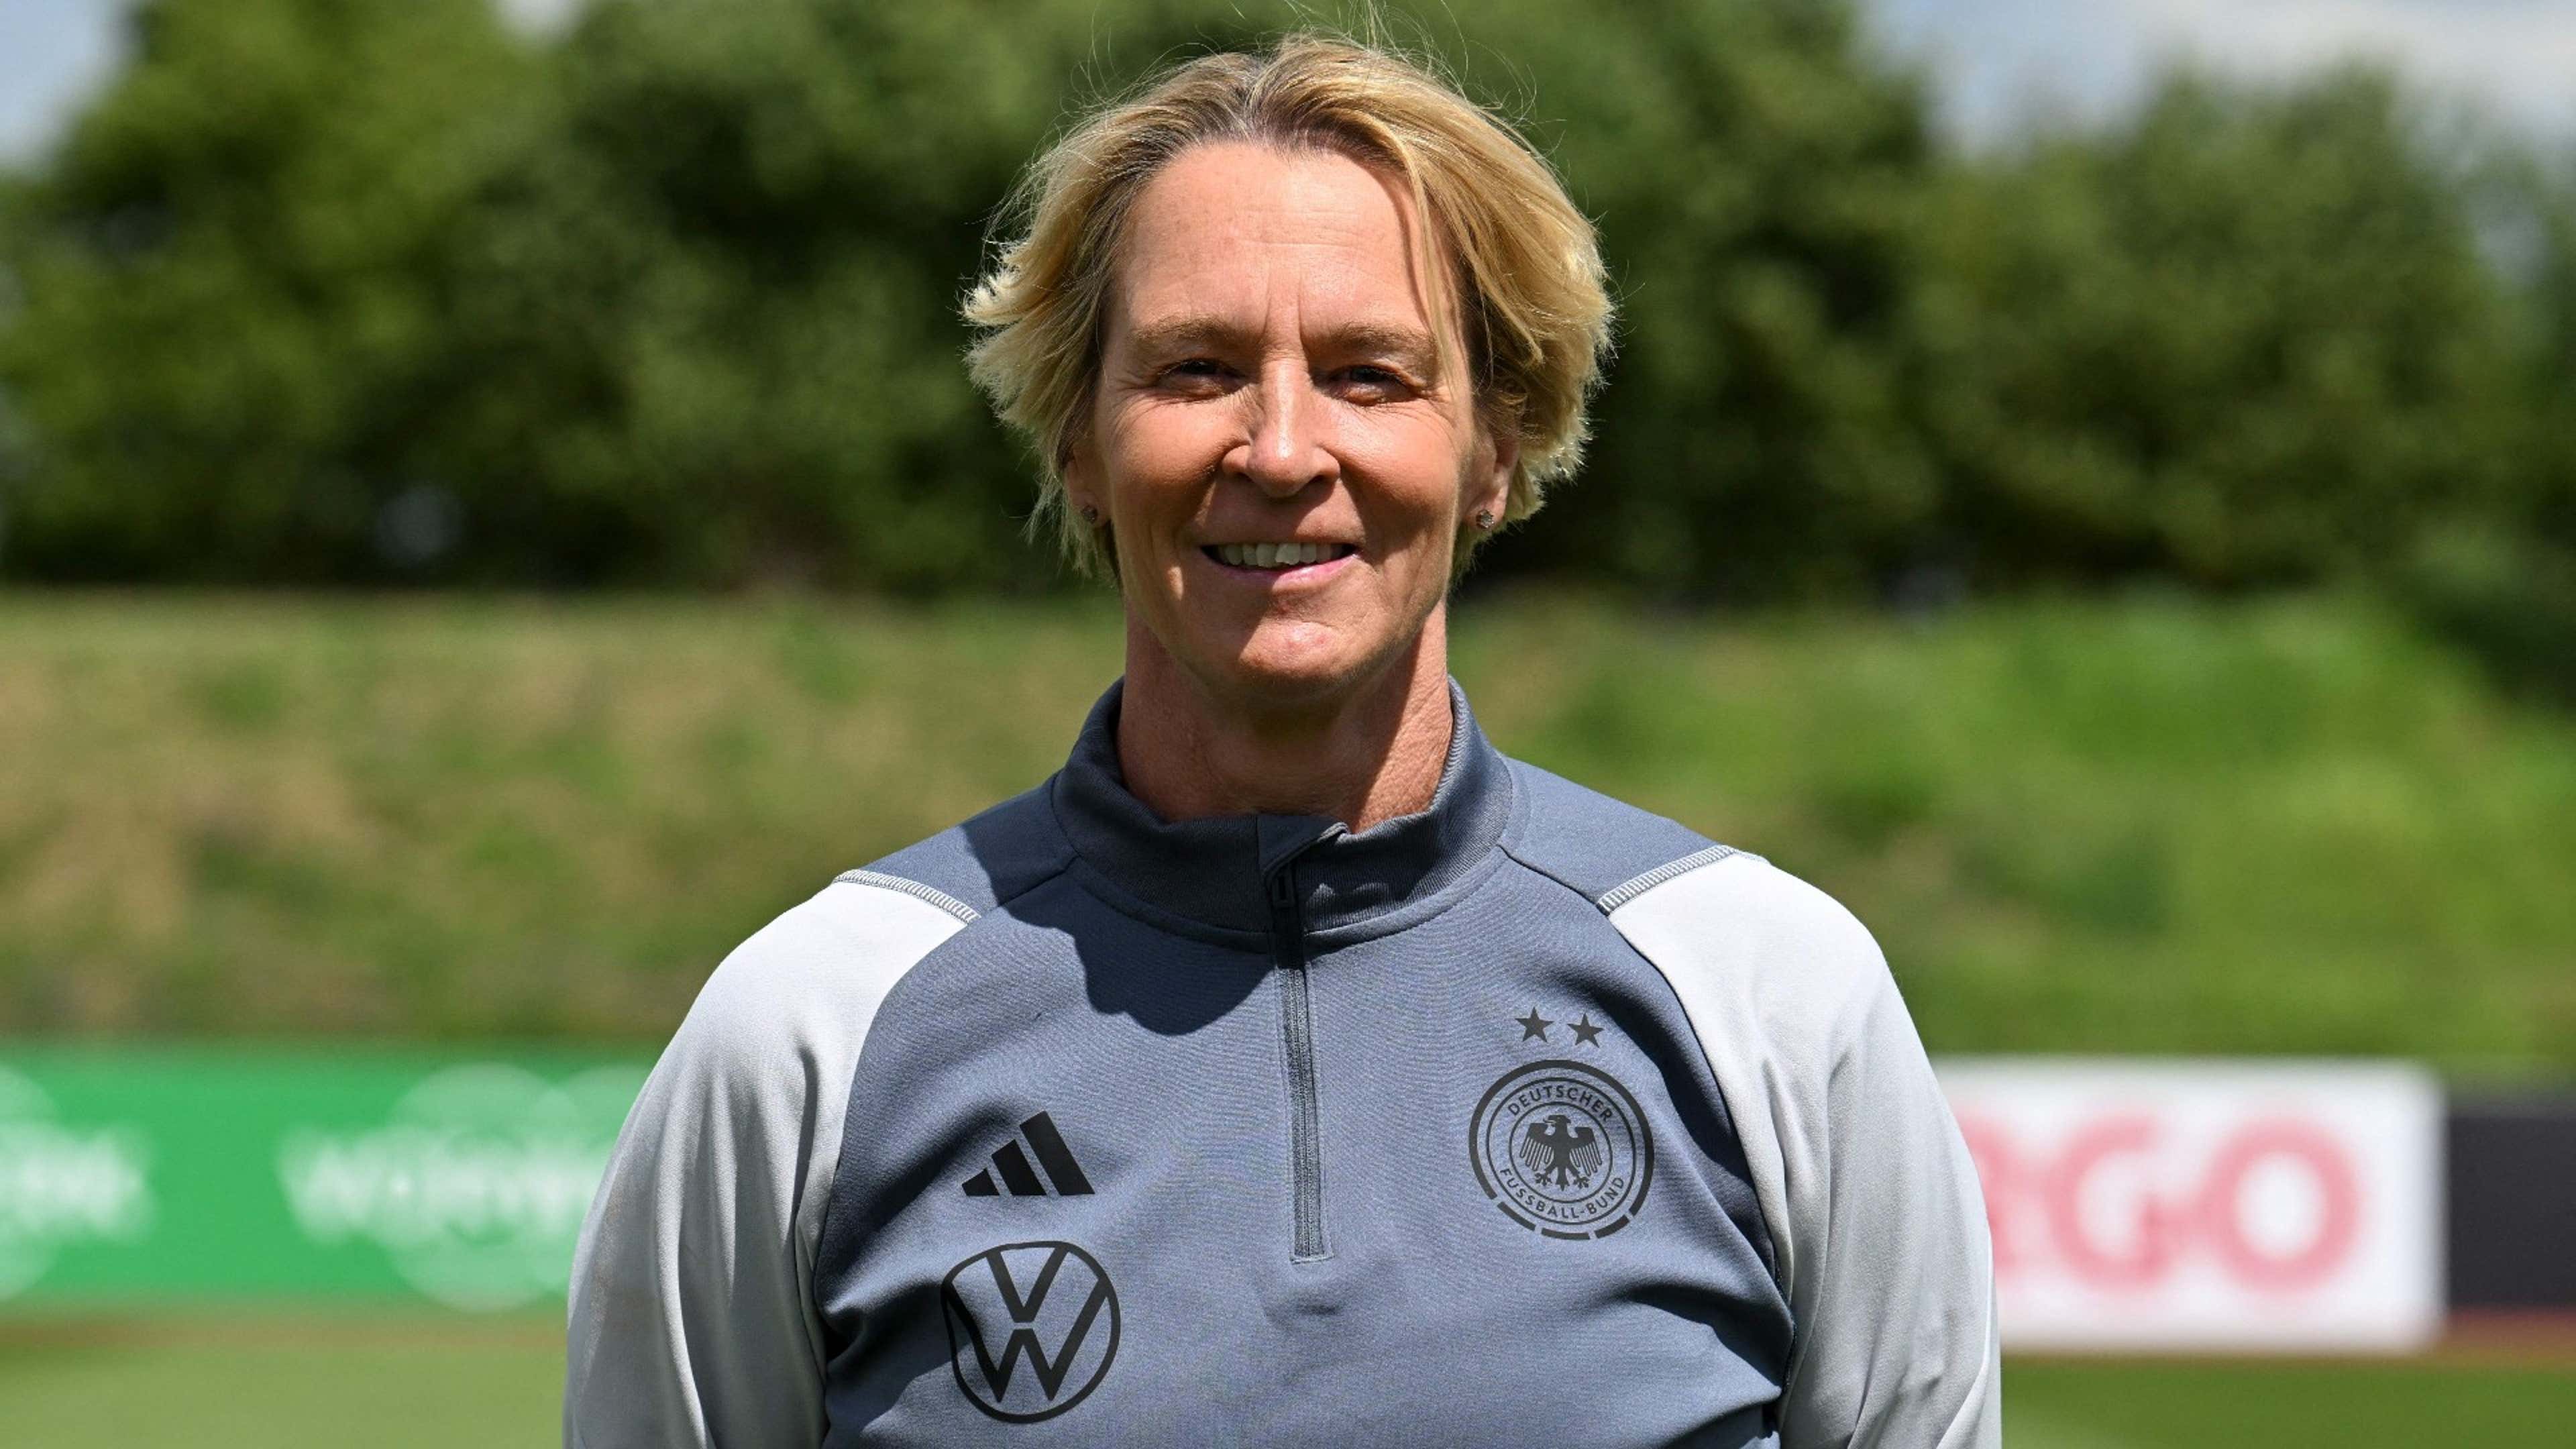 Germany's head coach Martina Voss-Tecklenburg